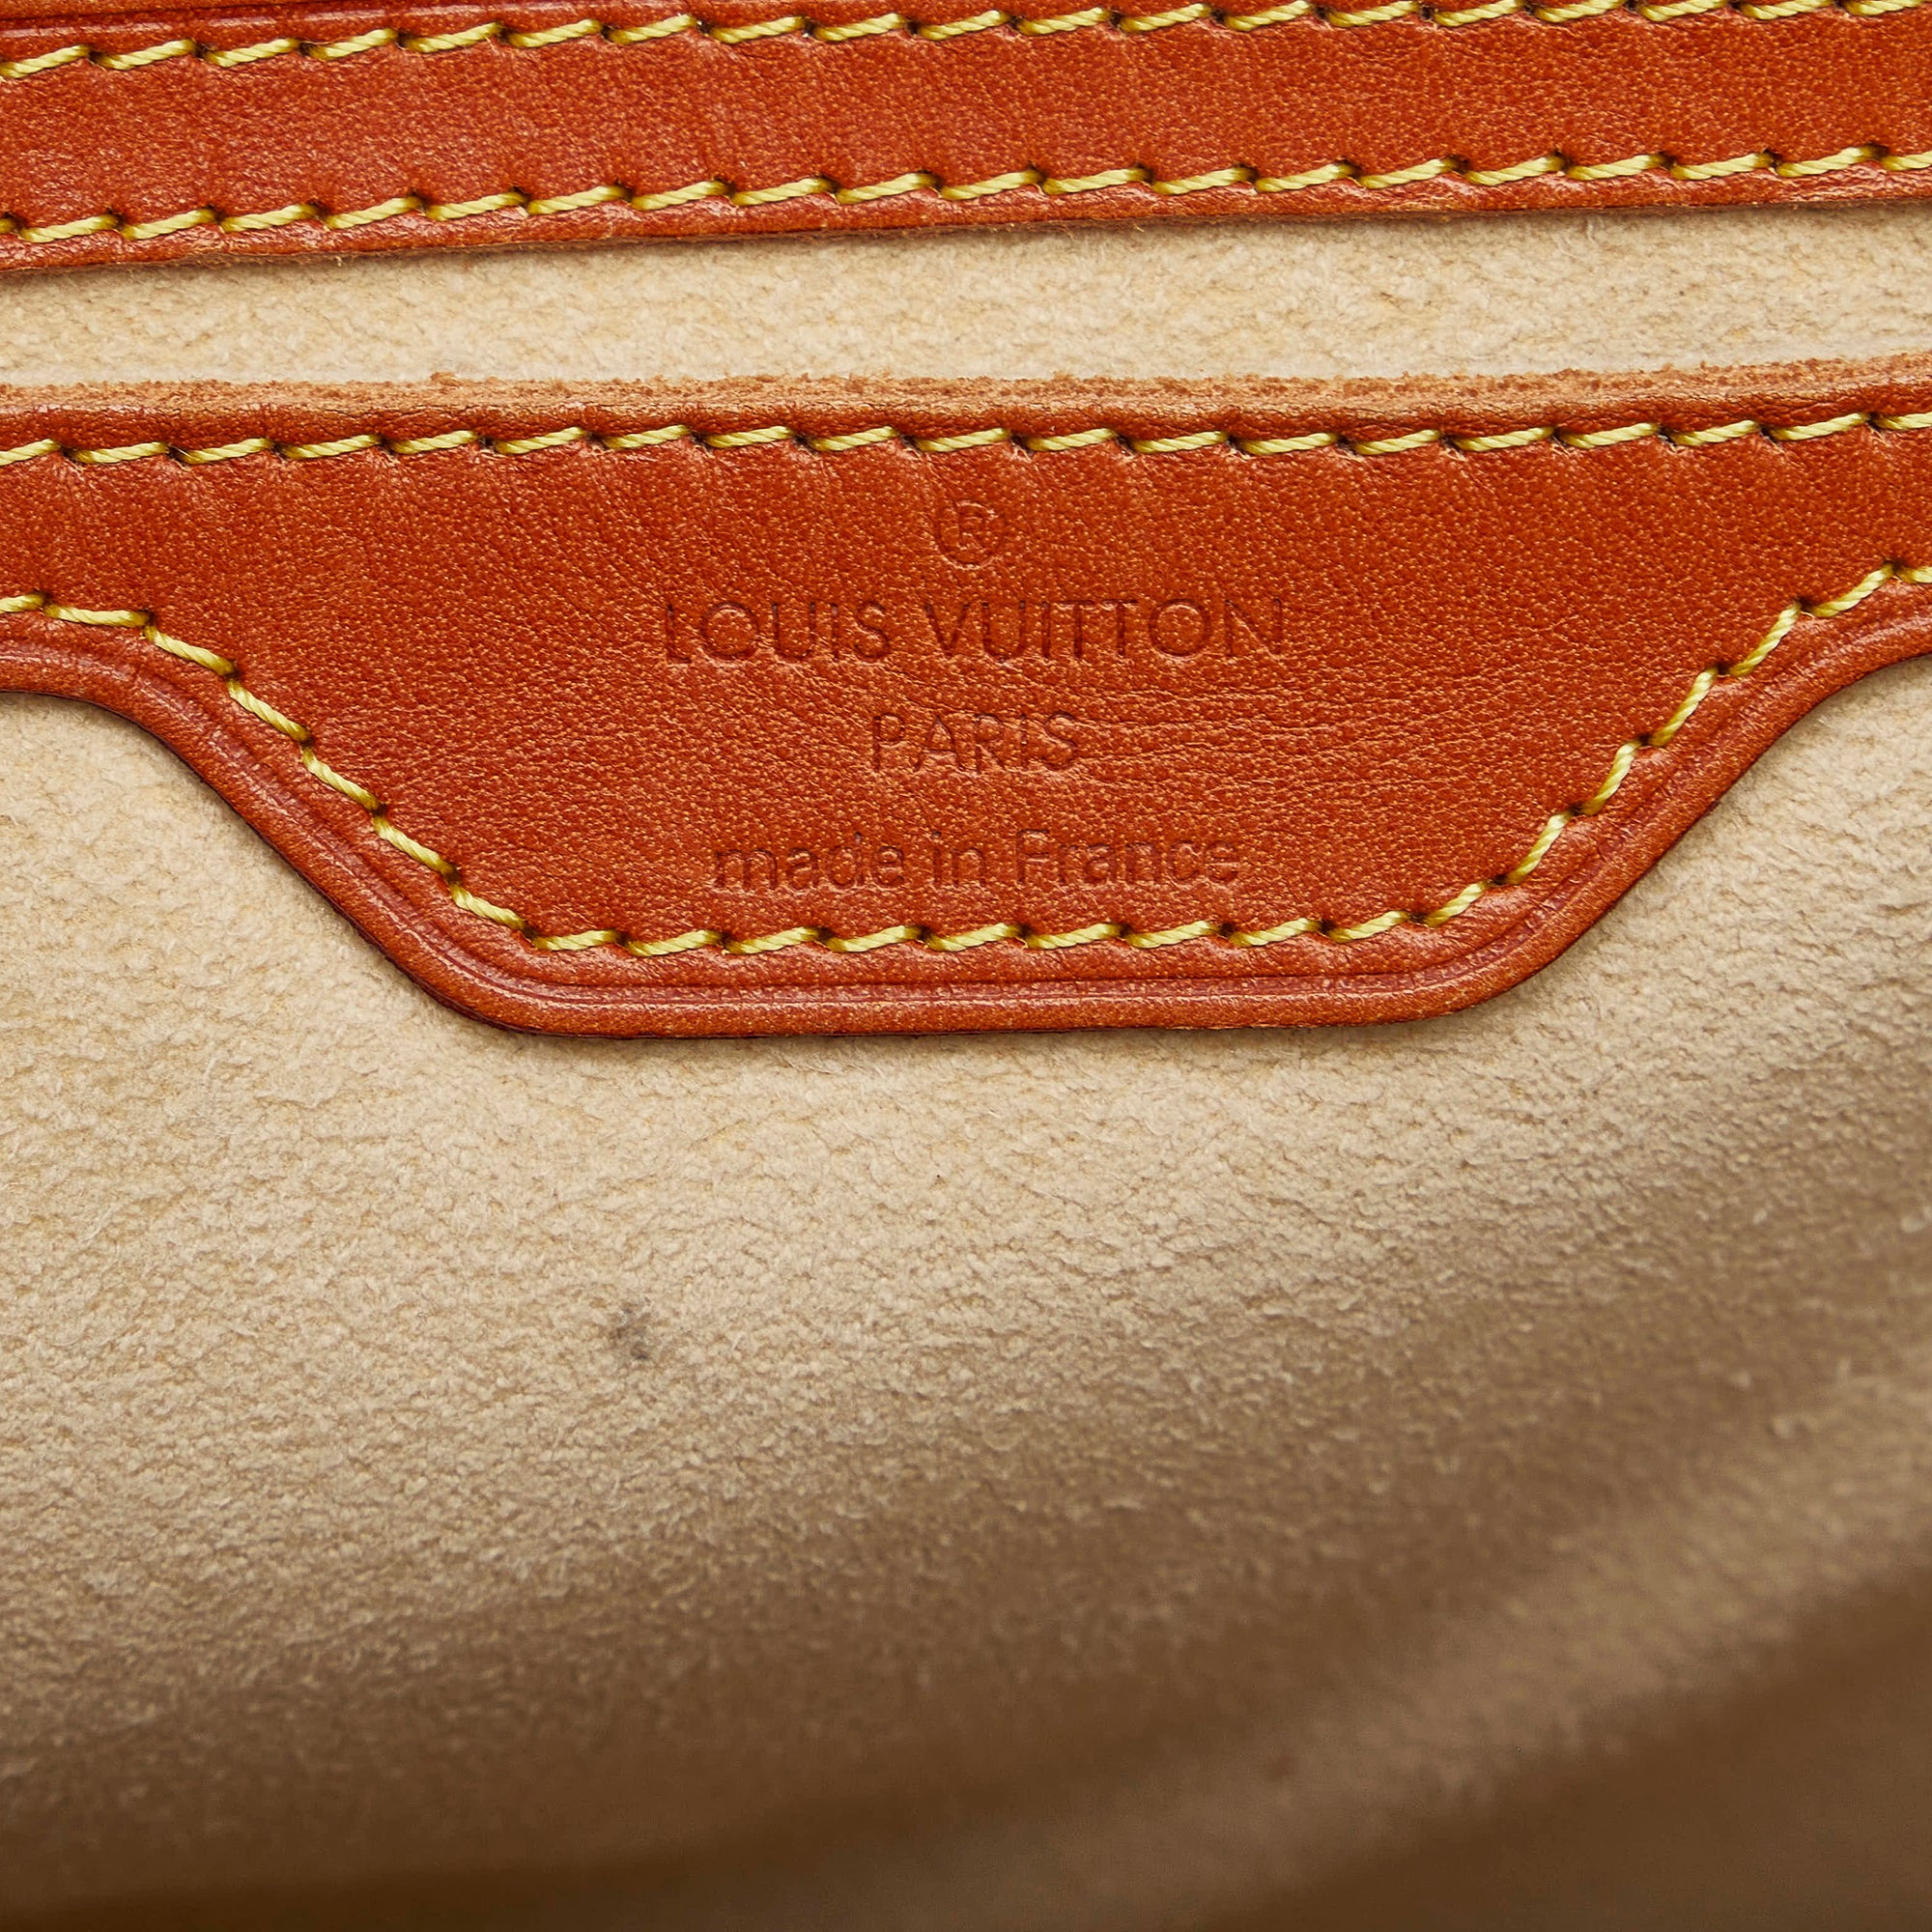 Louis Vuitton, Bags, Louis Vuitton Alma Nomade Pm